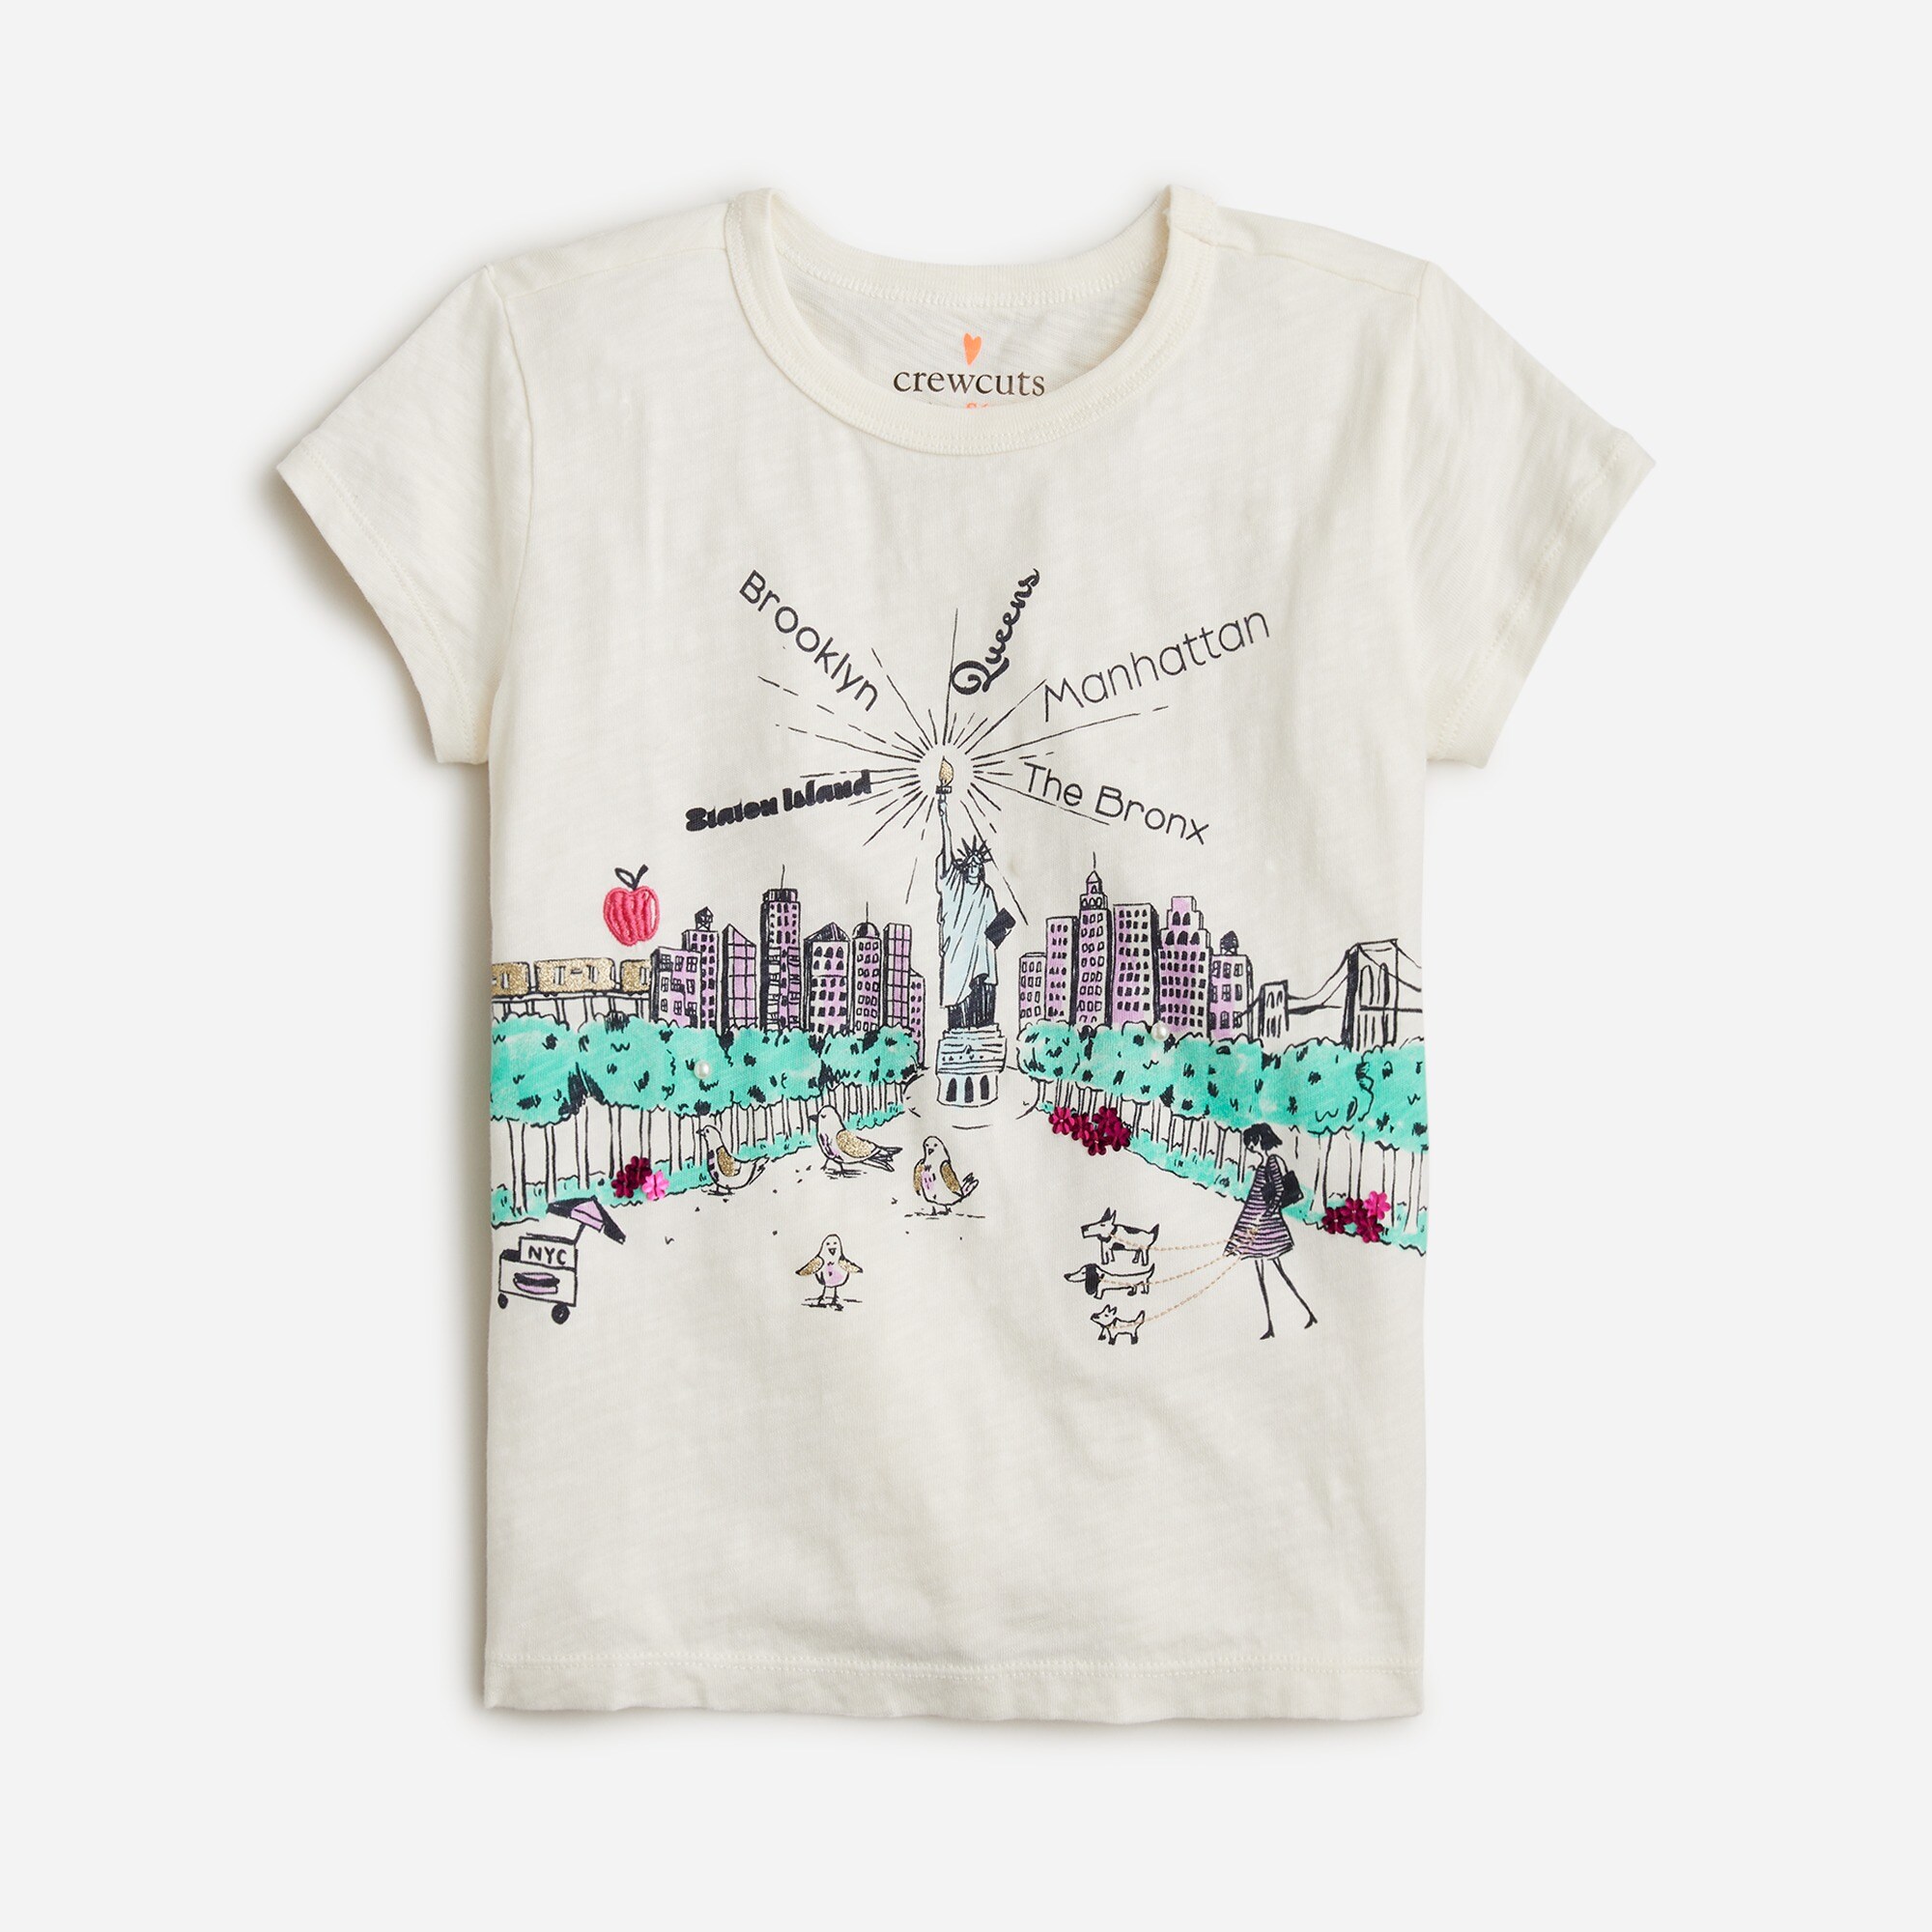  Girls' retro NYC graphic T-shirt with glitter